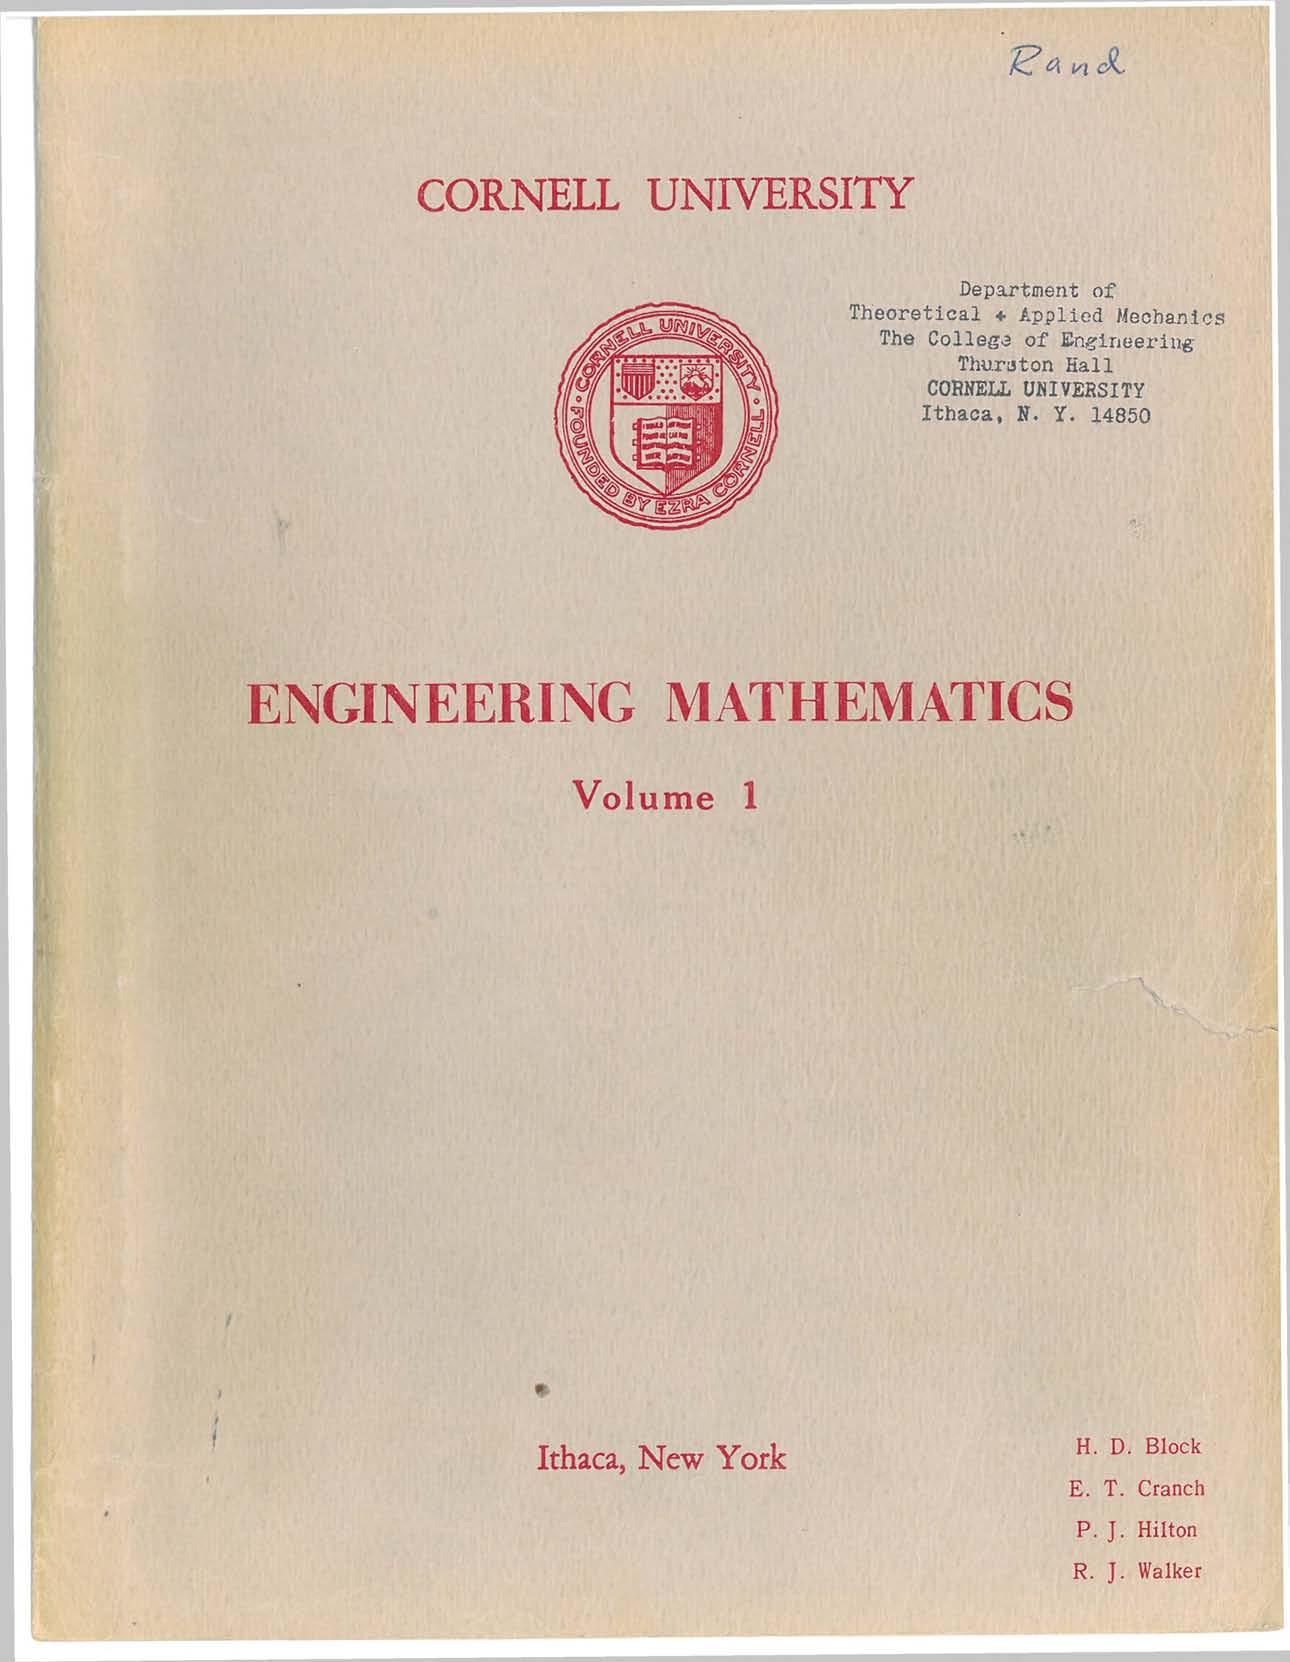 Engineering Mathematics Vol 1, 1964